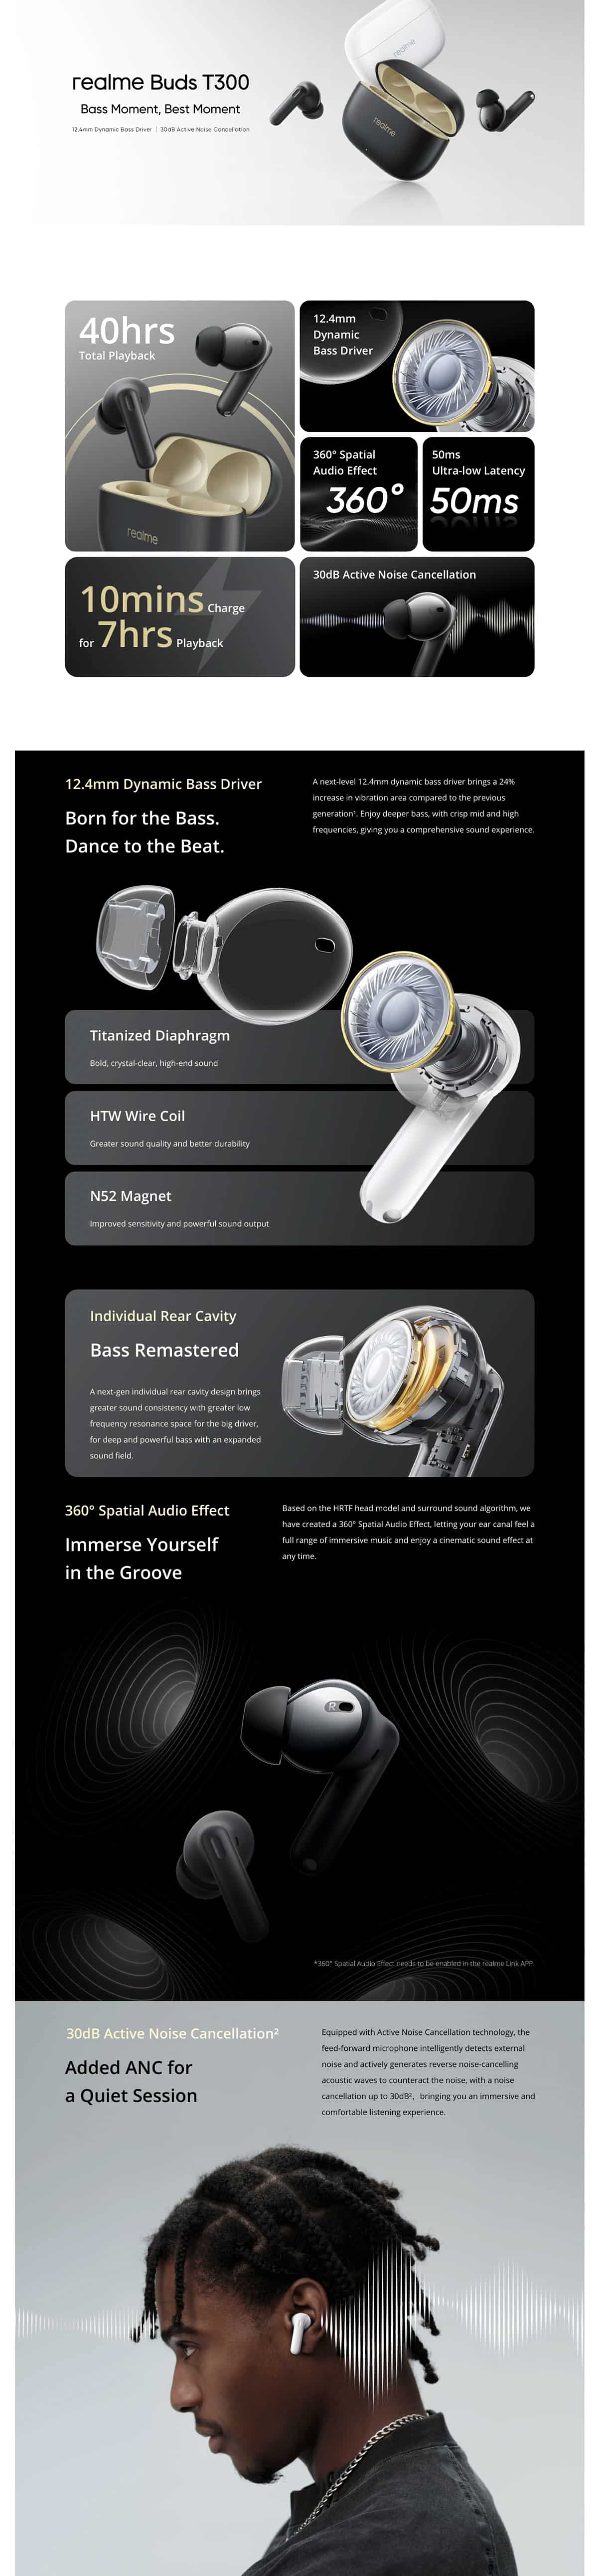 Realme Buds T300 ANC True Wireless Earbuds 6